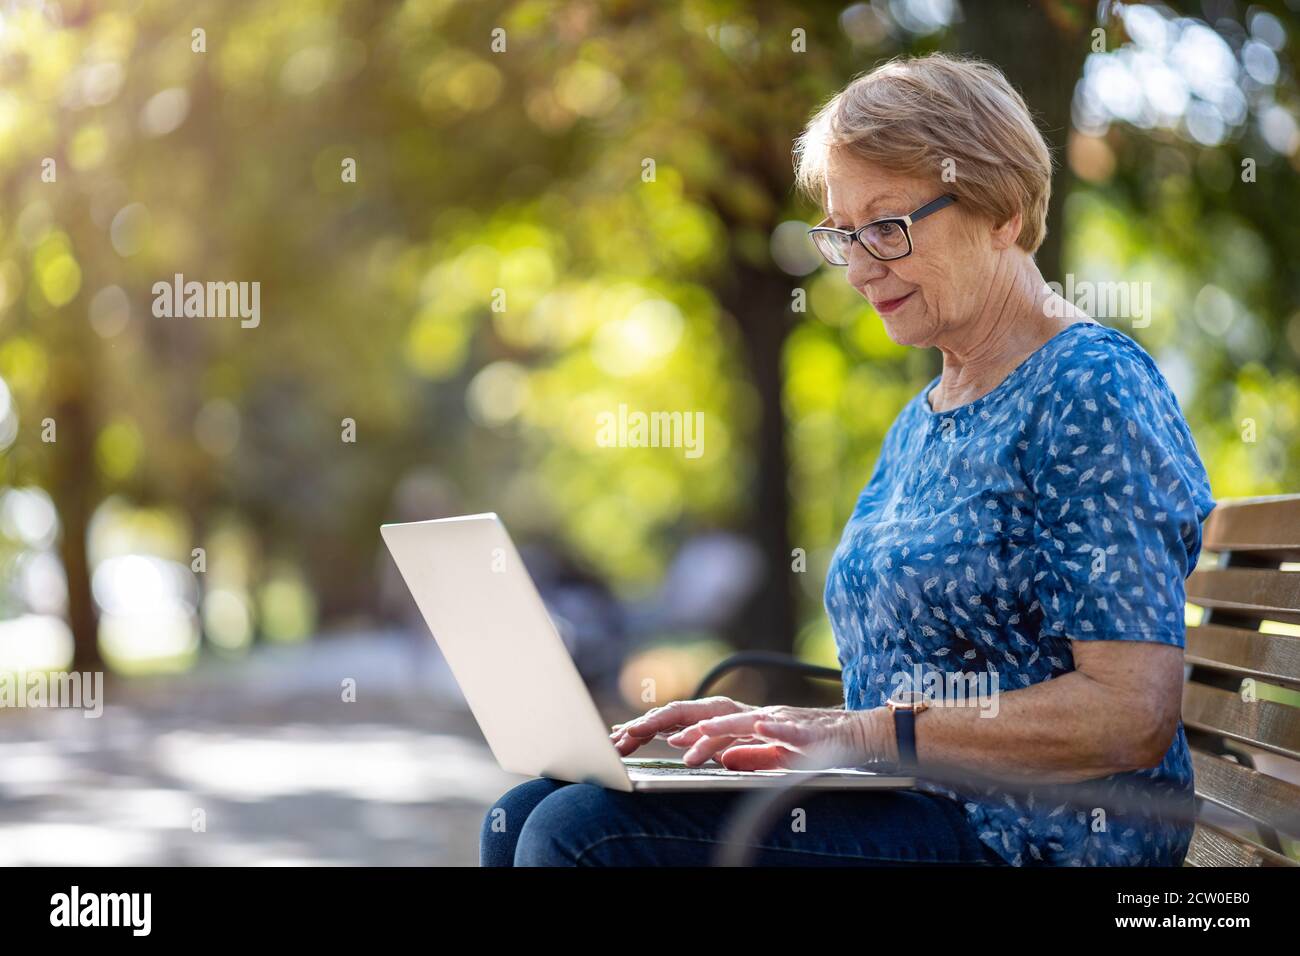 Senior woman using laptop on bench outdoors Stock Photo